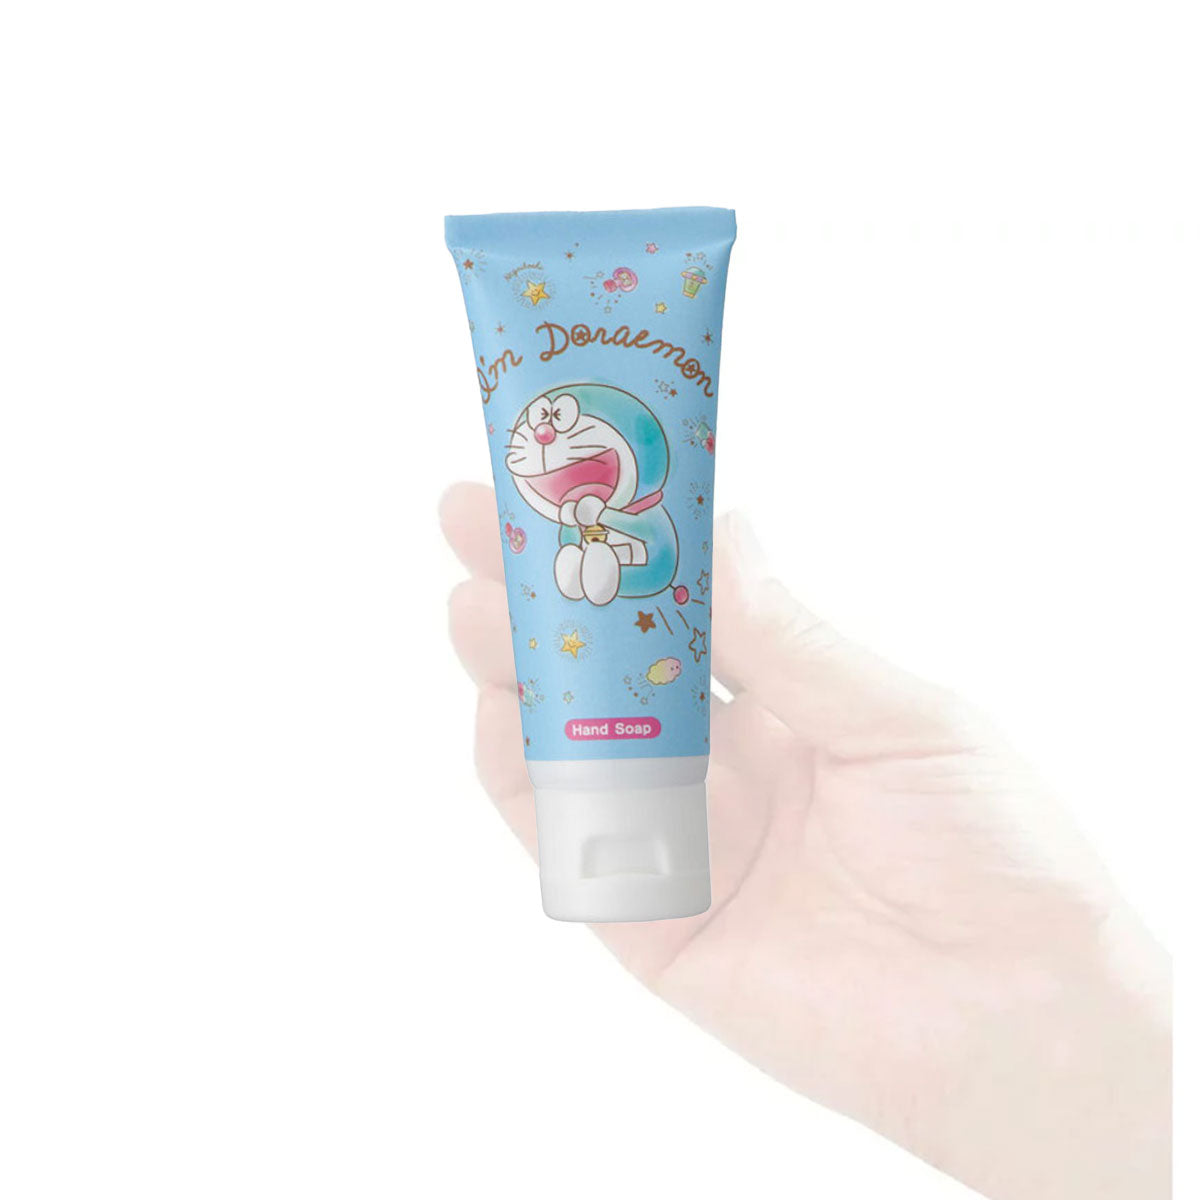 Sanrio Hand Soap #Doraemon 40g